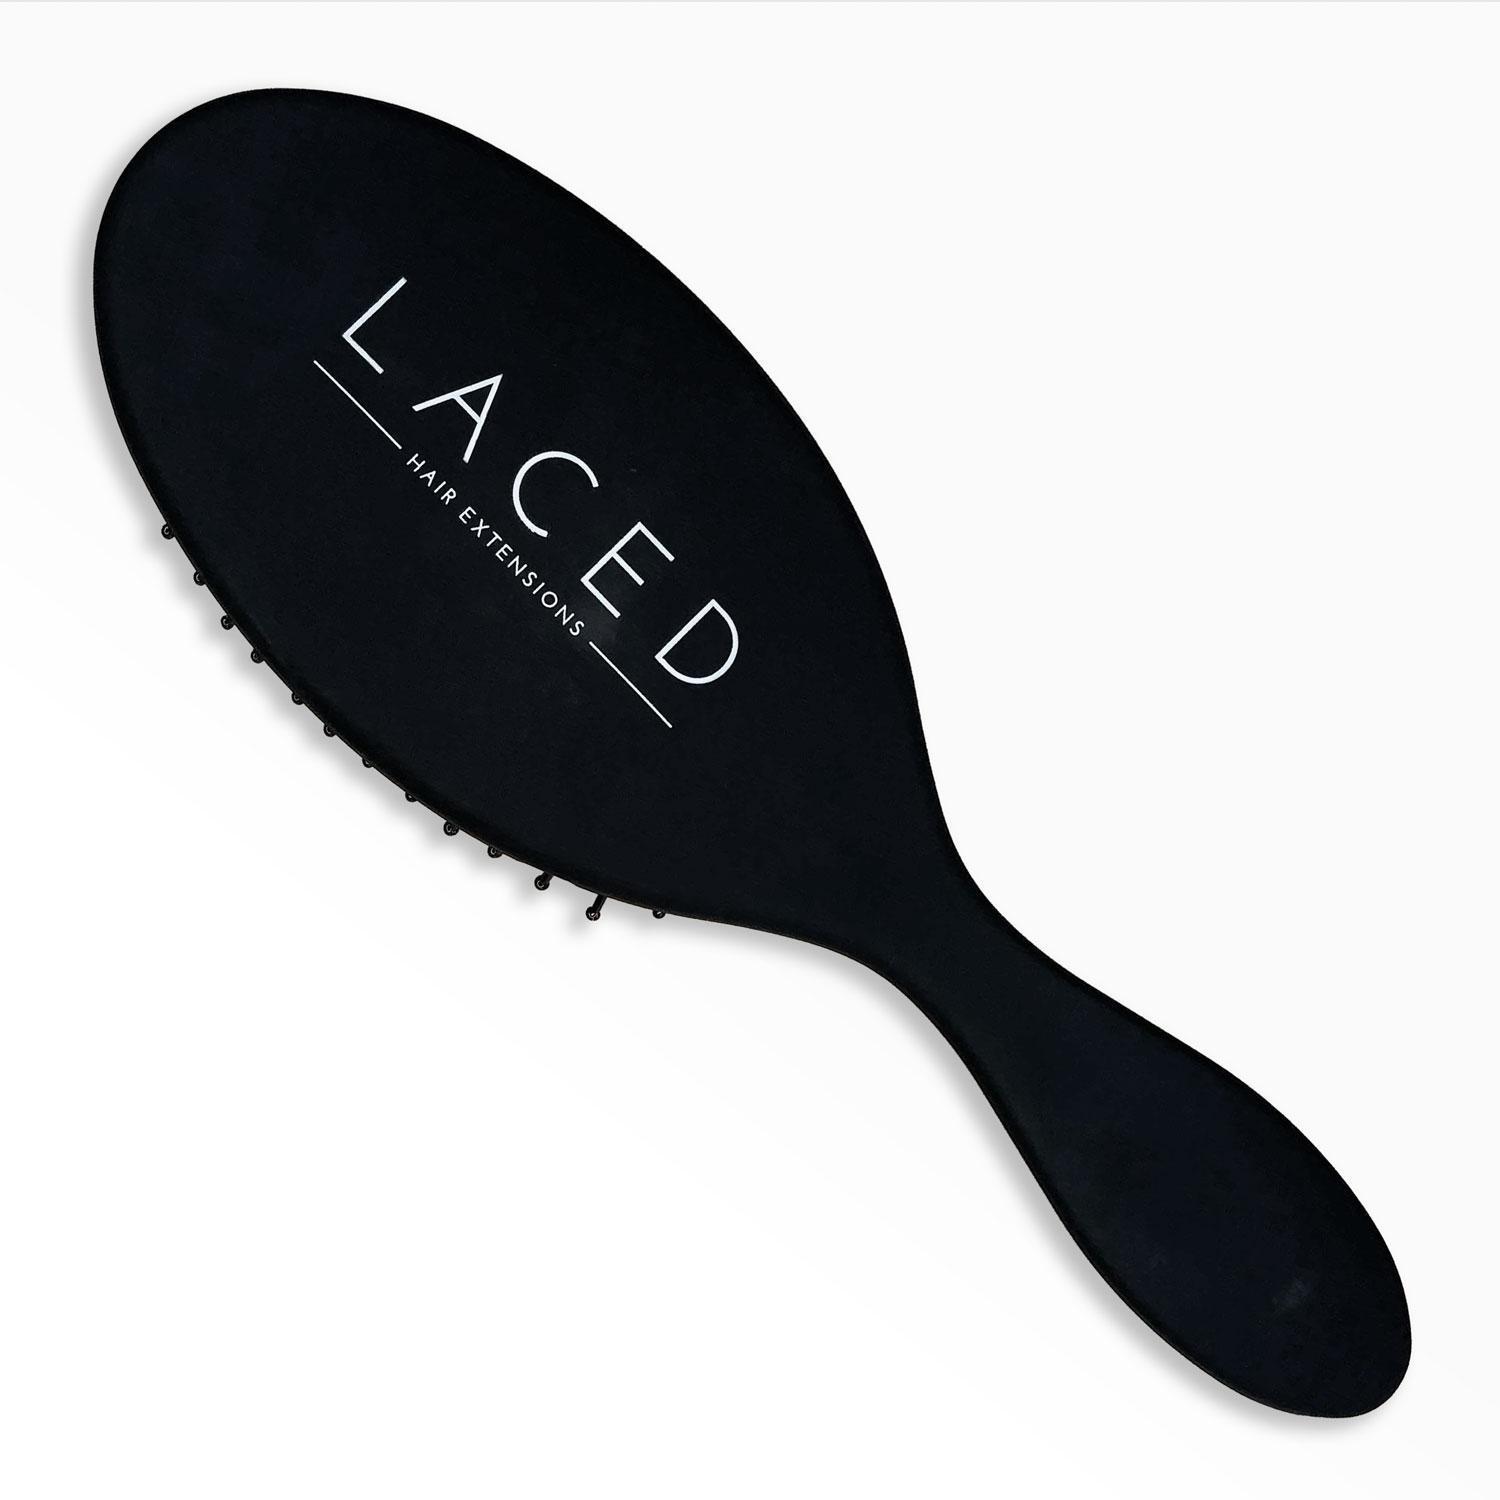 Laced Hair Stylist Starter Kit